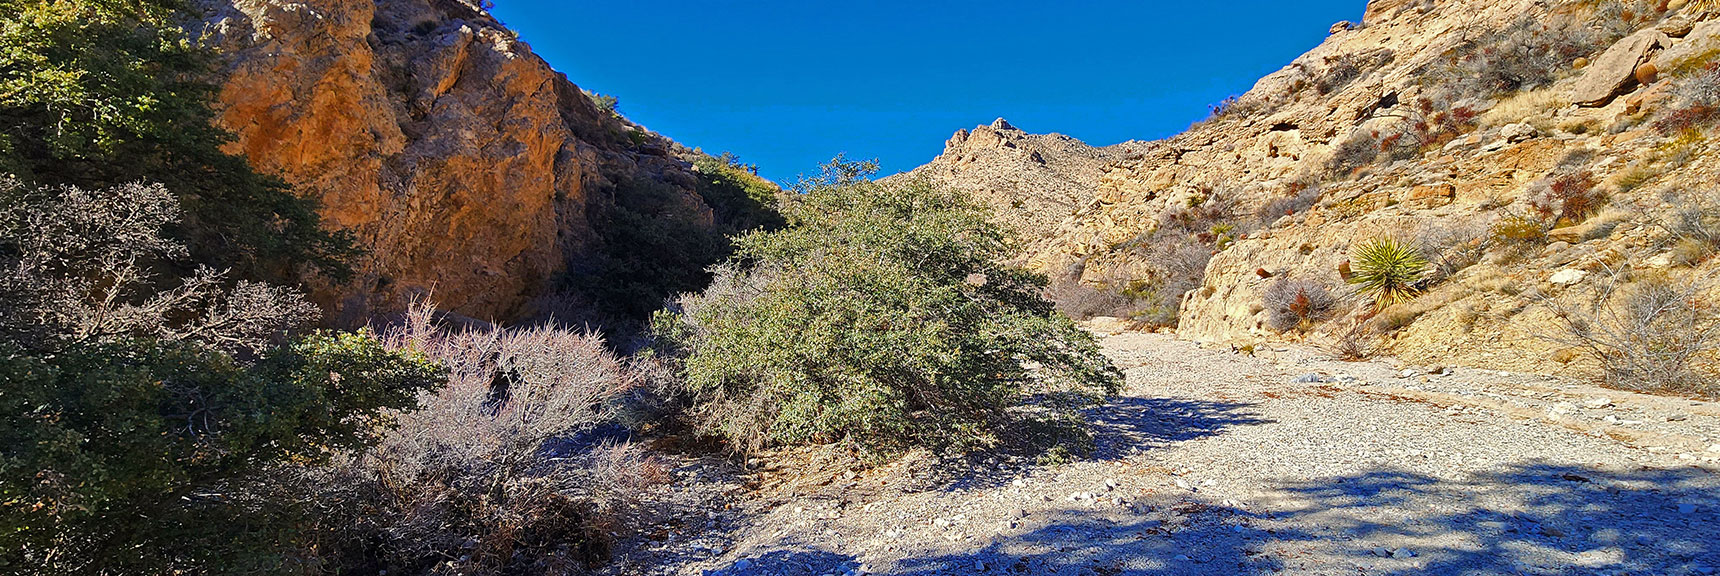 Desert Holly Tree Ahead, Gateway Canyon Narrowing | Pink Goblin Loop | Calico Basin, Nevada